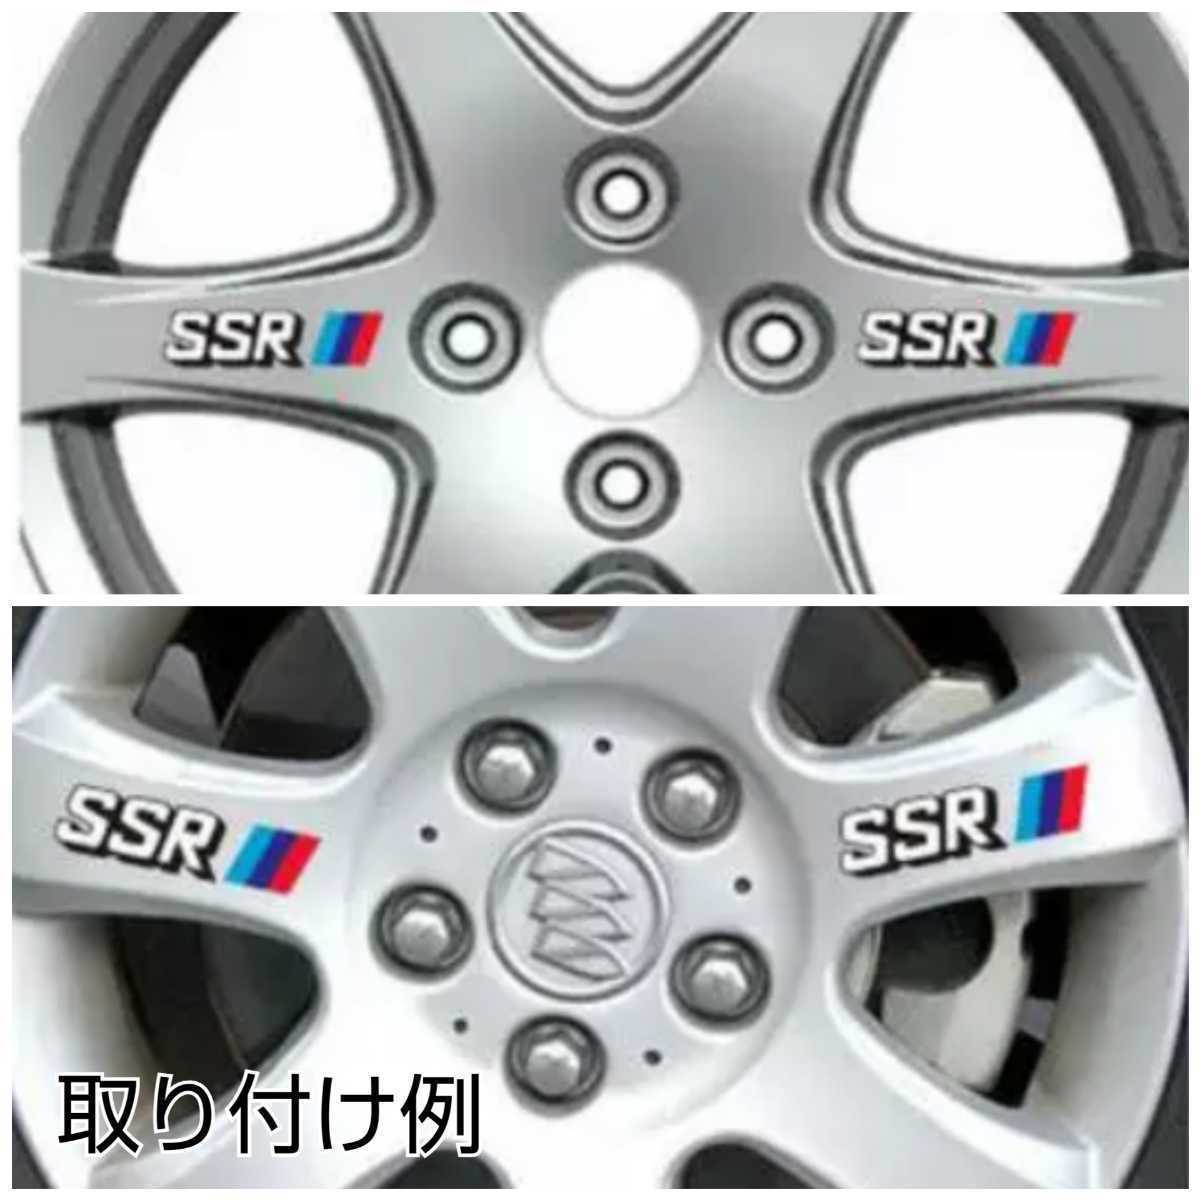 SSR ホイール用ステッカー 4P(検)VOLK RACING RAYS WORK BBS ENKEI BADX WALD トヨタ 日産 ホンダ スズキ ダイハツ BMW メルセデス_画像3